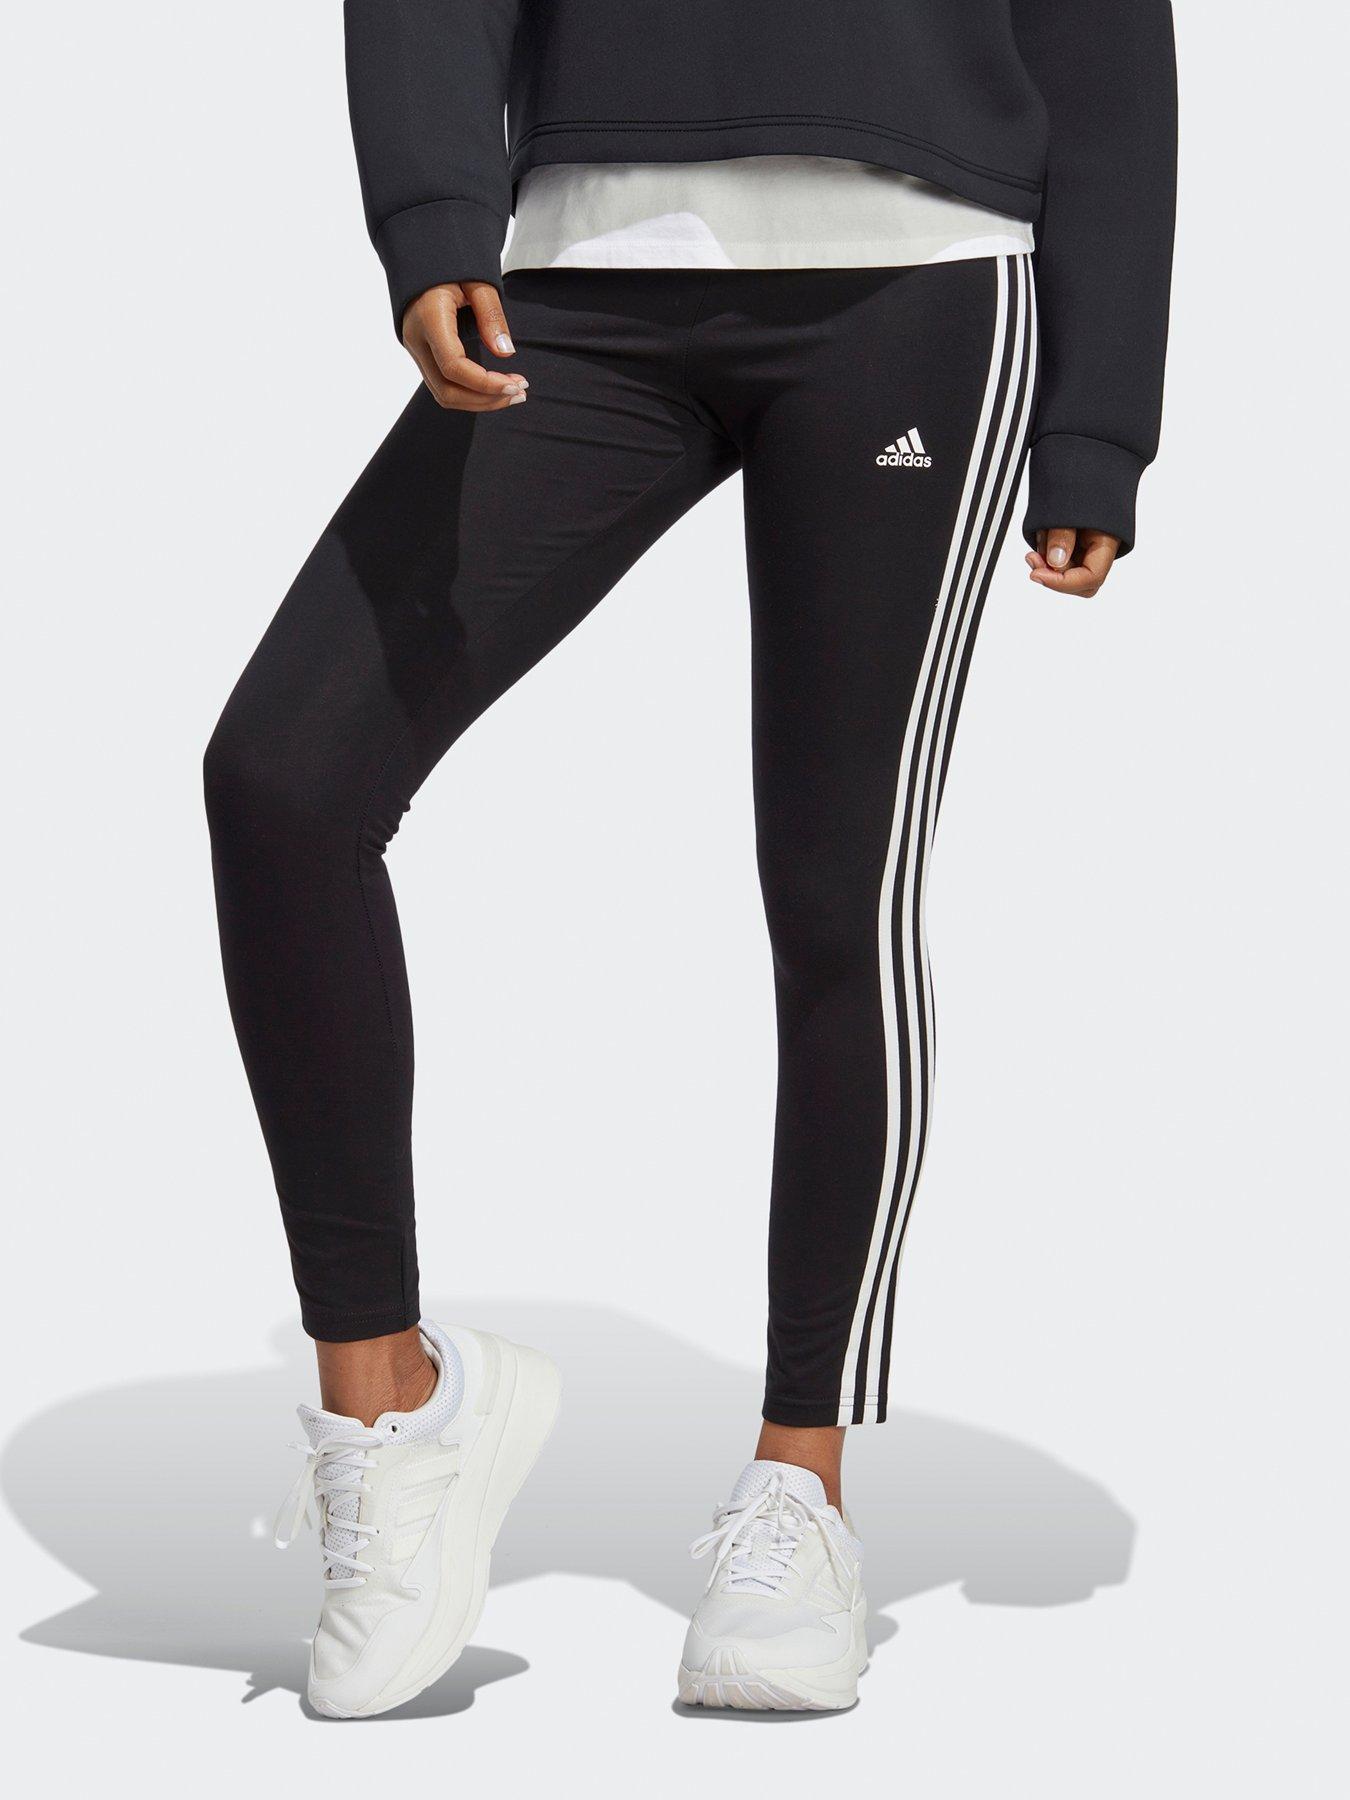 Adidas Originals 3 Stripes Leggings  New York